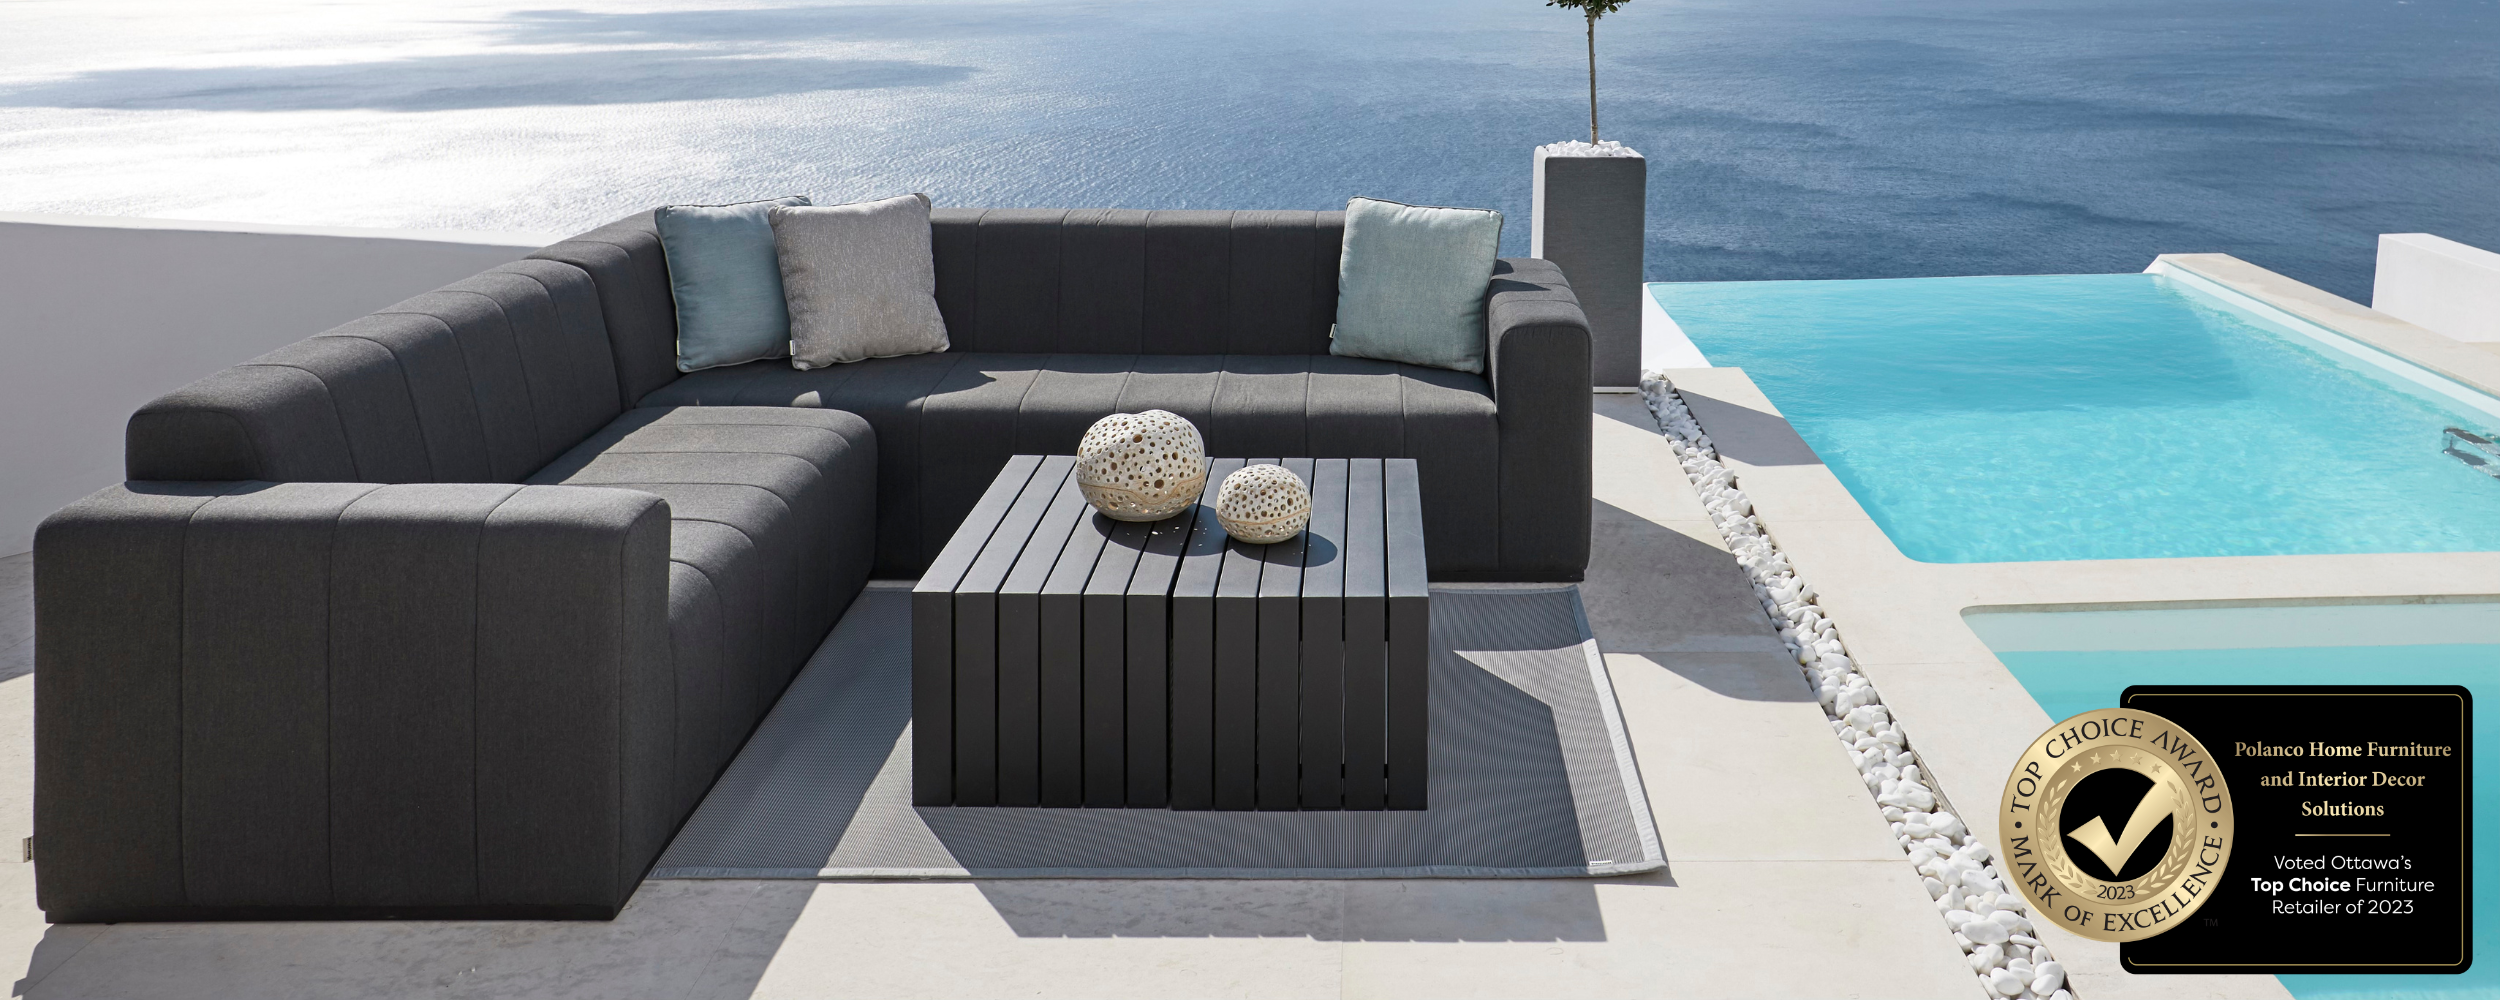 Polanco Home Furniture and Interior Decor Solutions Online